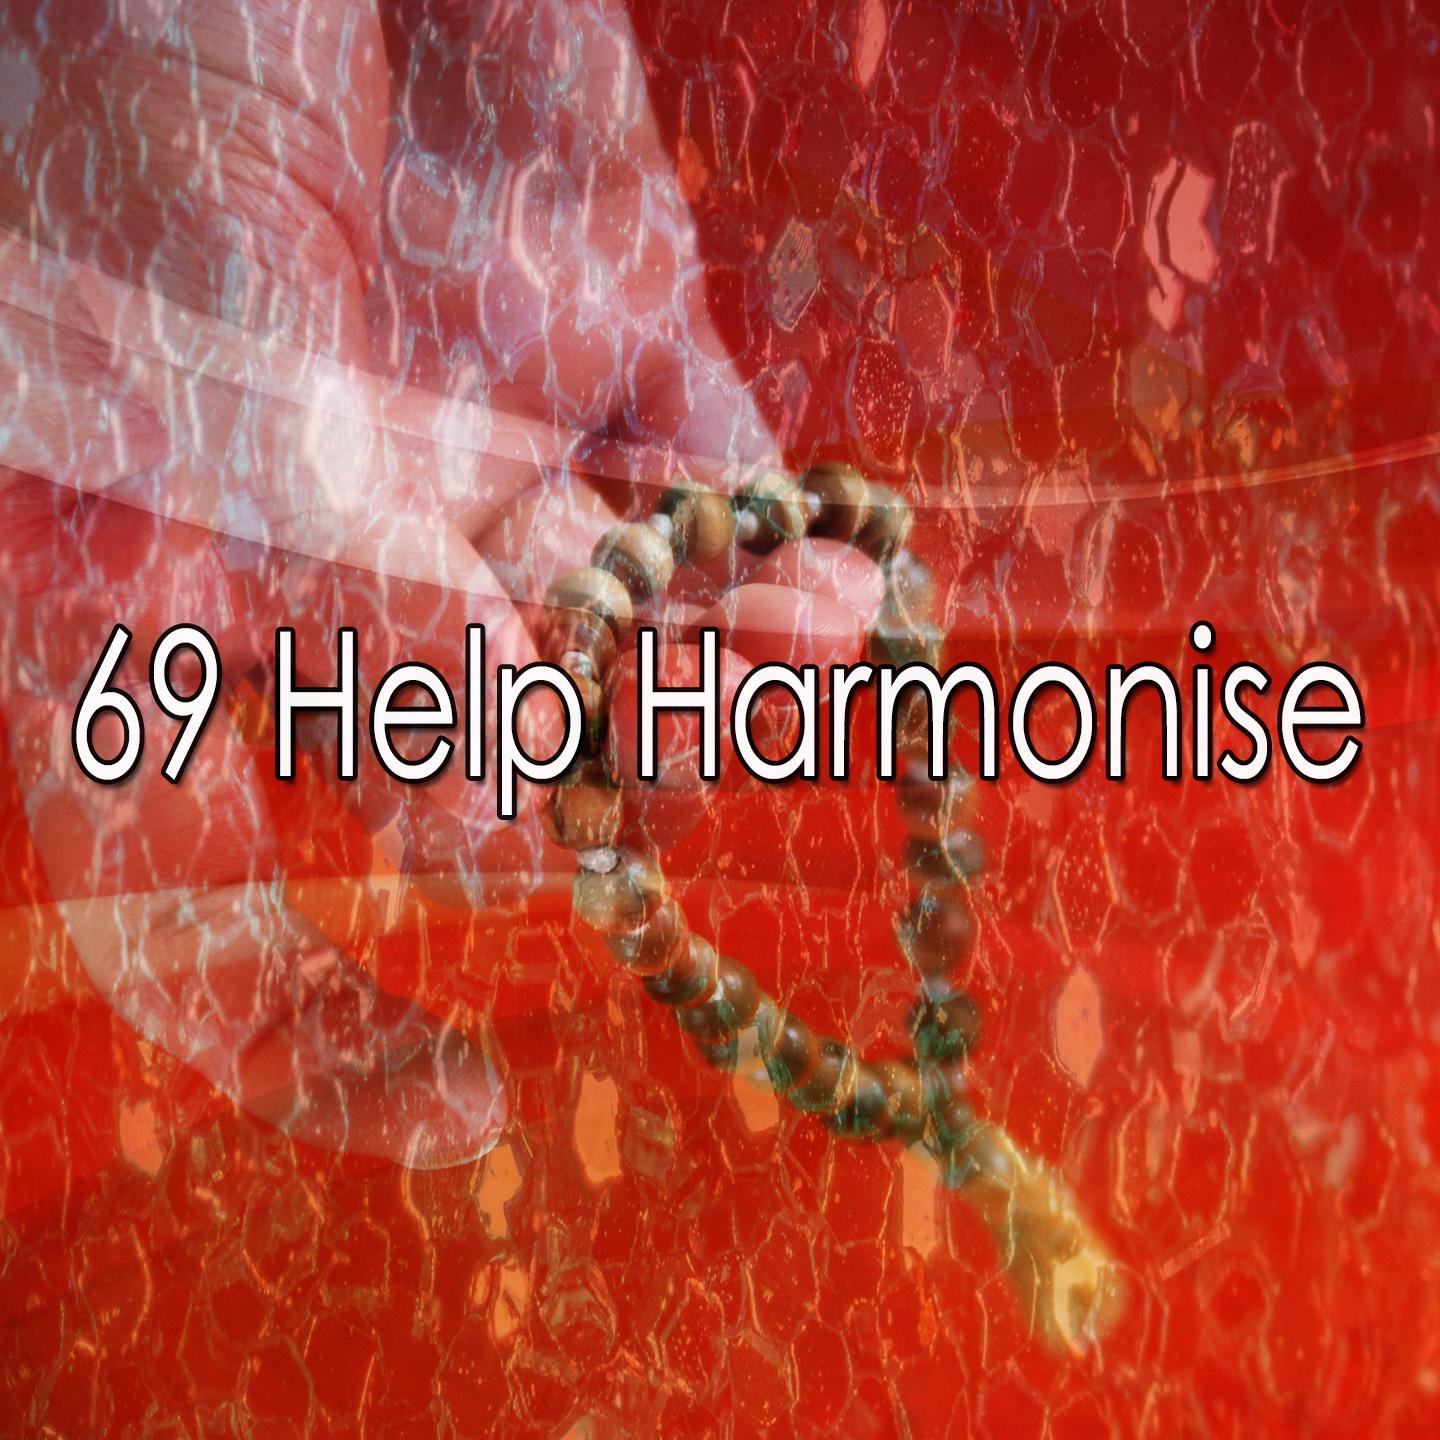 69 Help Harmonise